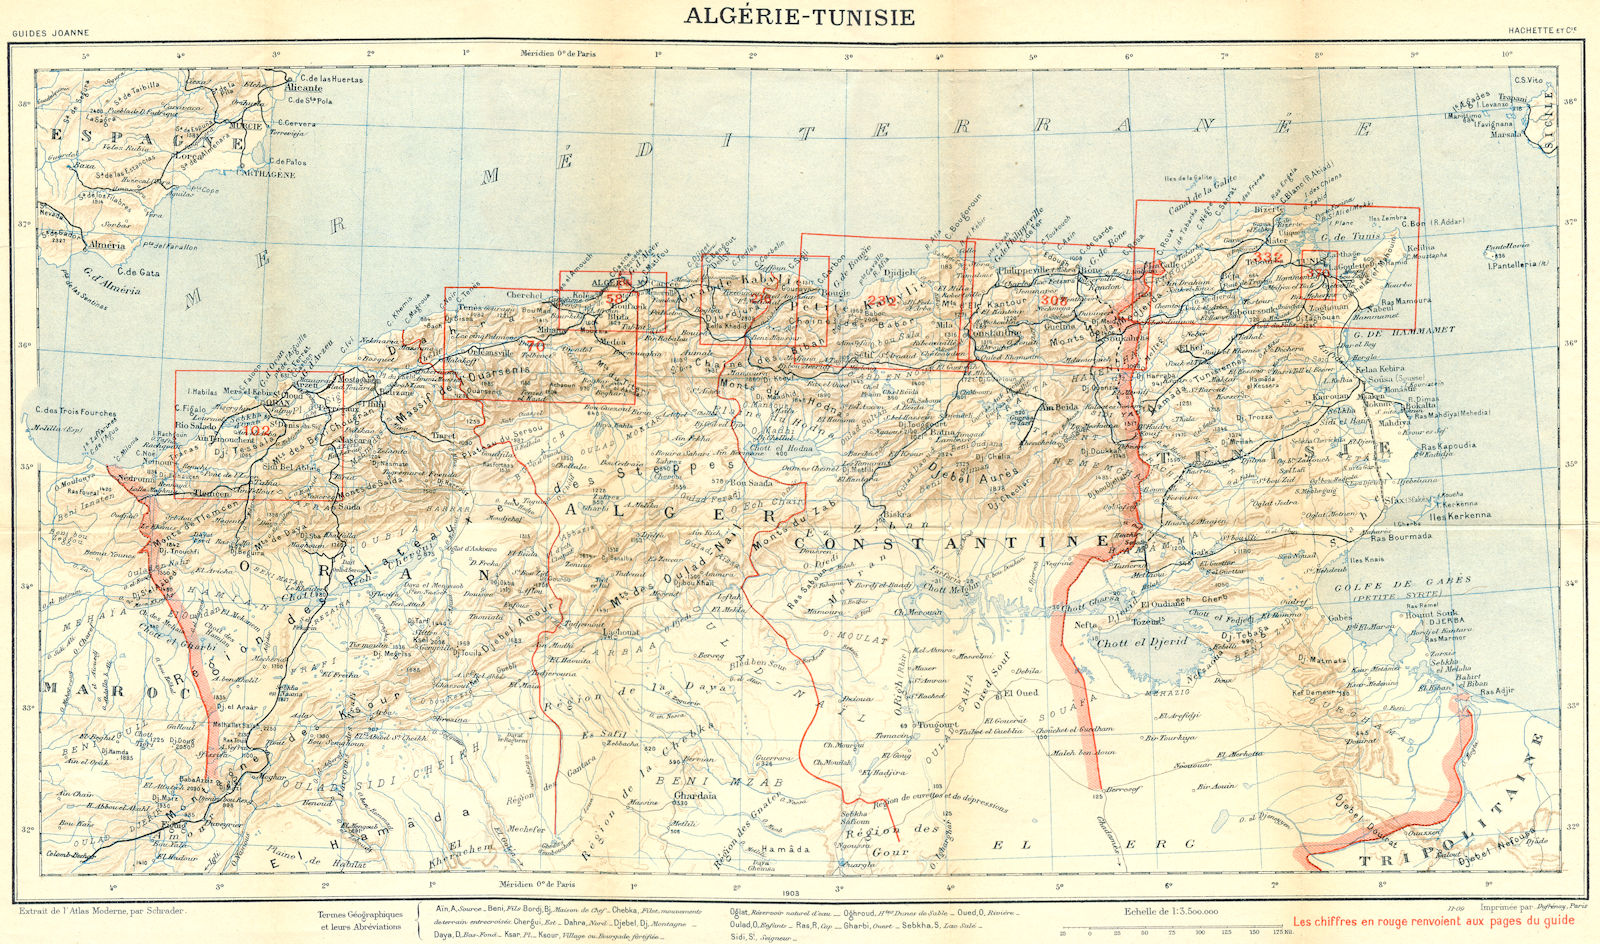 ALGERIA TUNISIA. Tunisie 1909 old antique vintage map plan chart